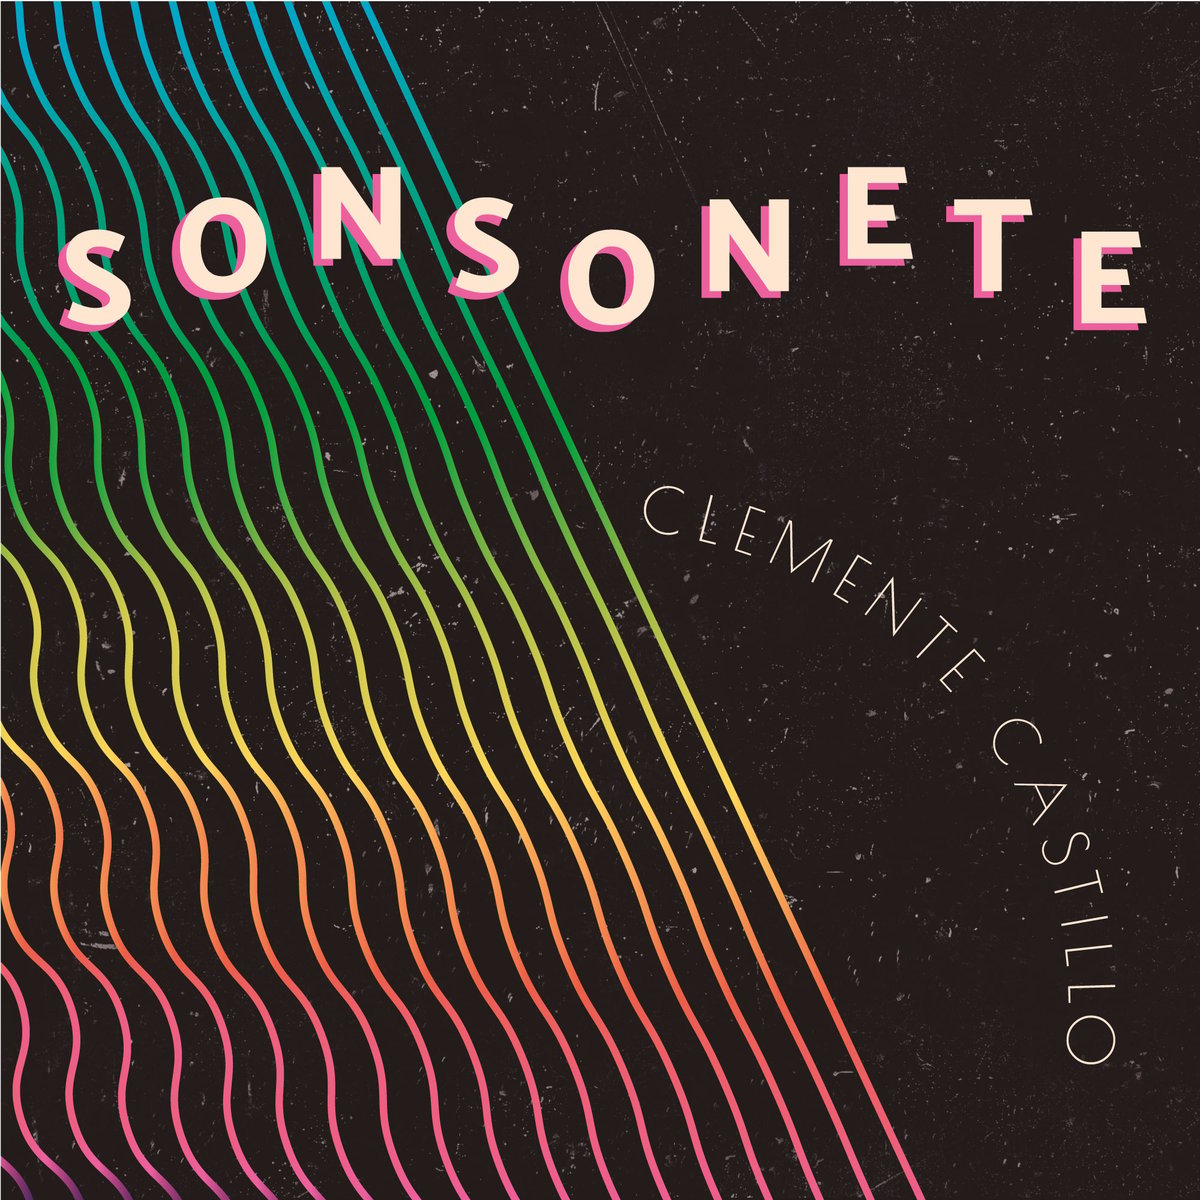 Image of Clemente Castillo limited edition “Sonsonete”  vinyl EP